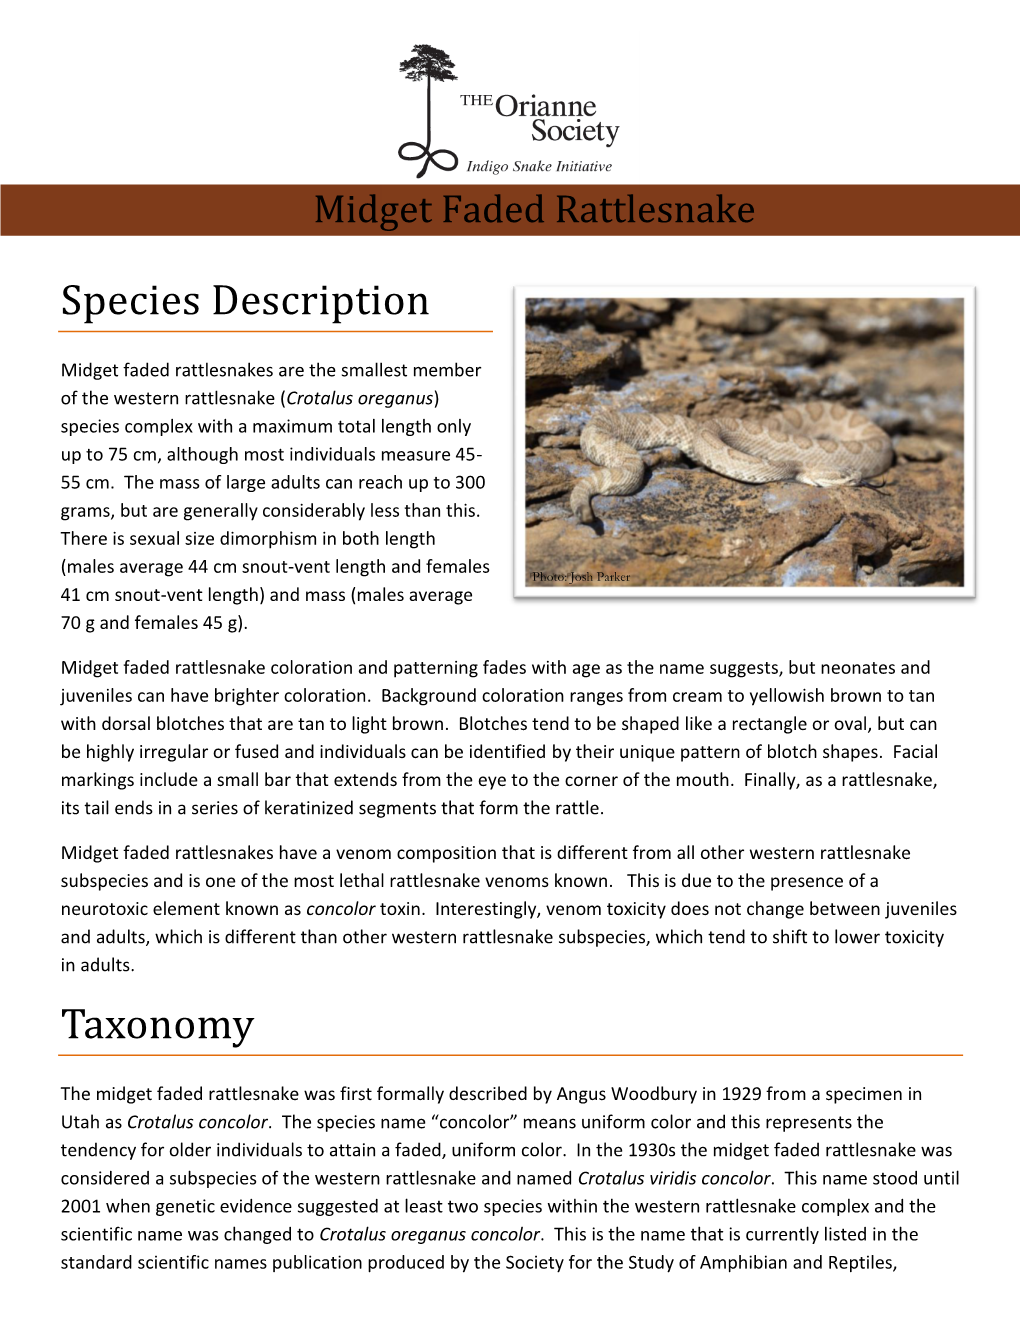 Species Description Taxonomy